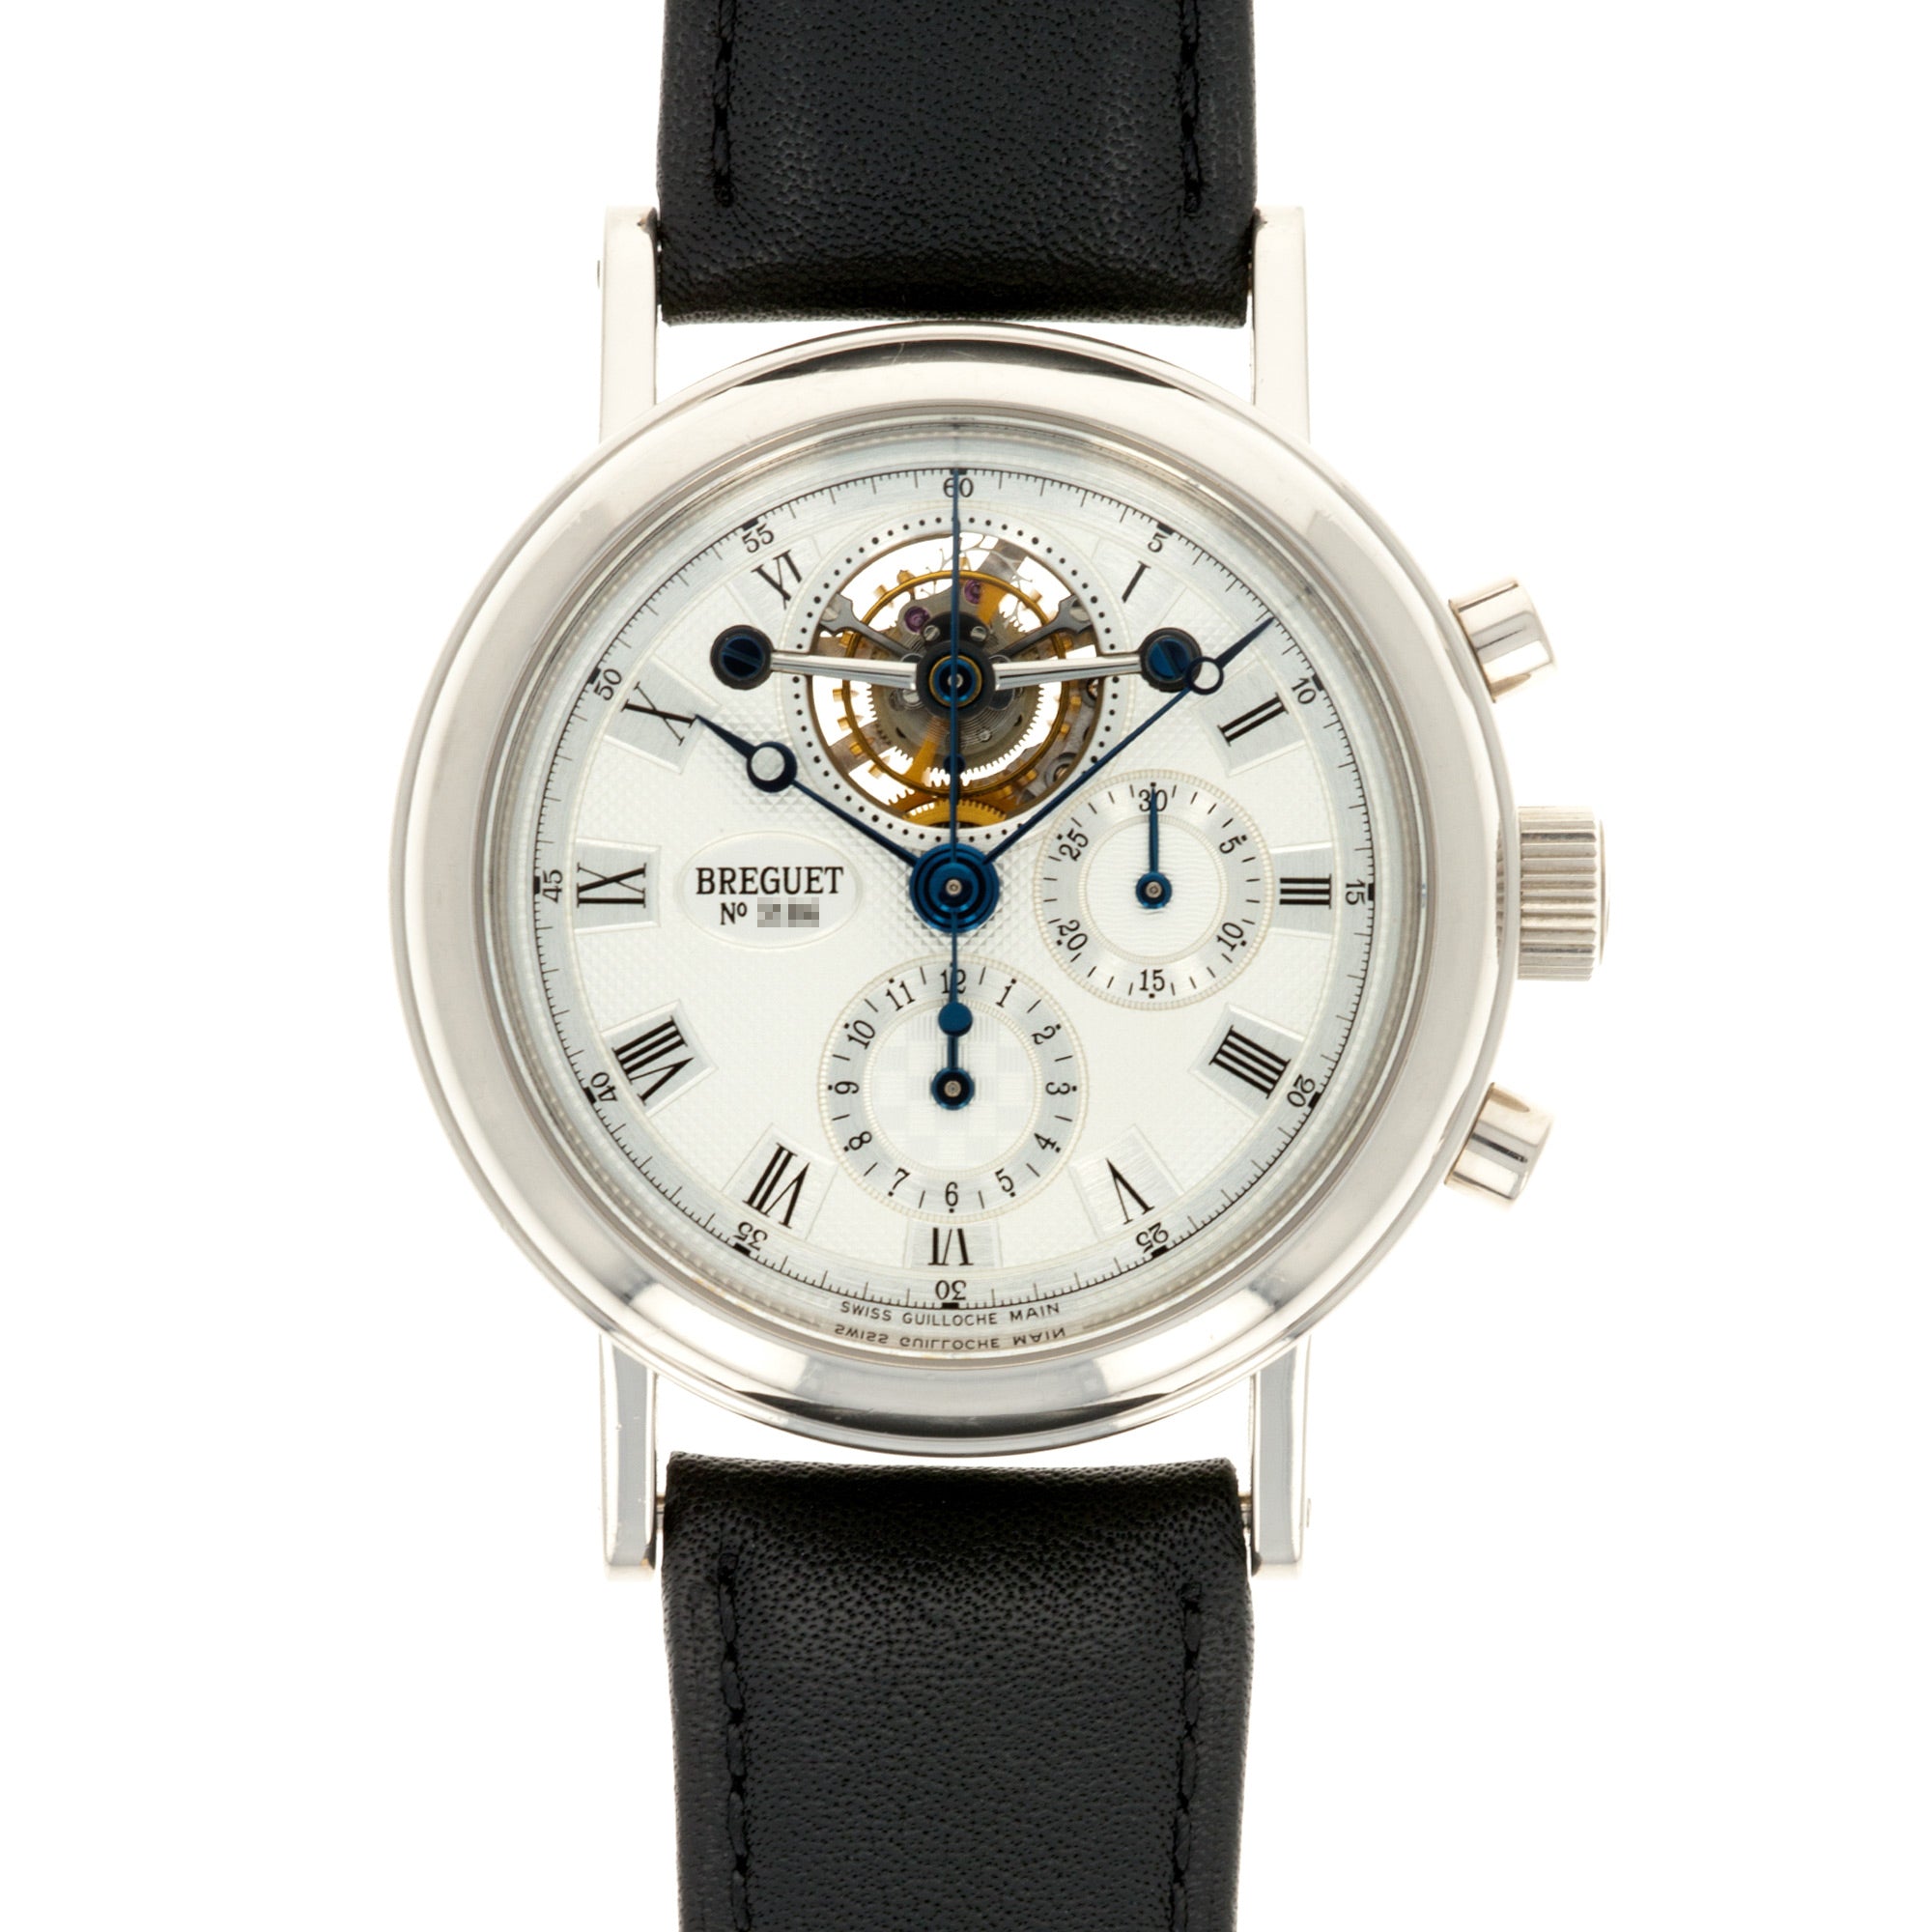 Breguet - Breguet White Gold Chronograph Tourbillon Watch Ref. 3577 - The Keystone Watches